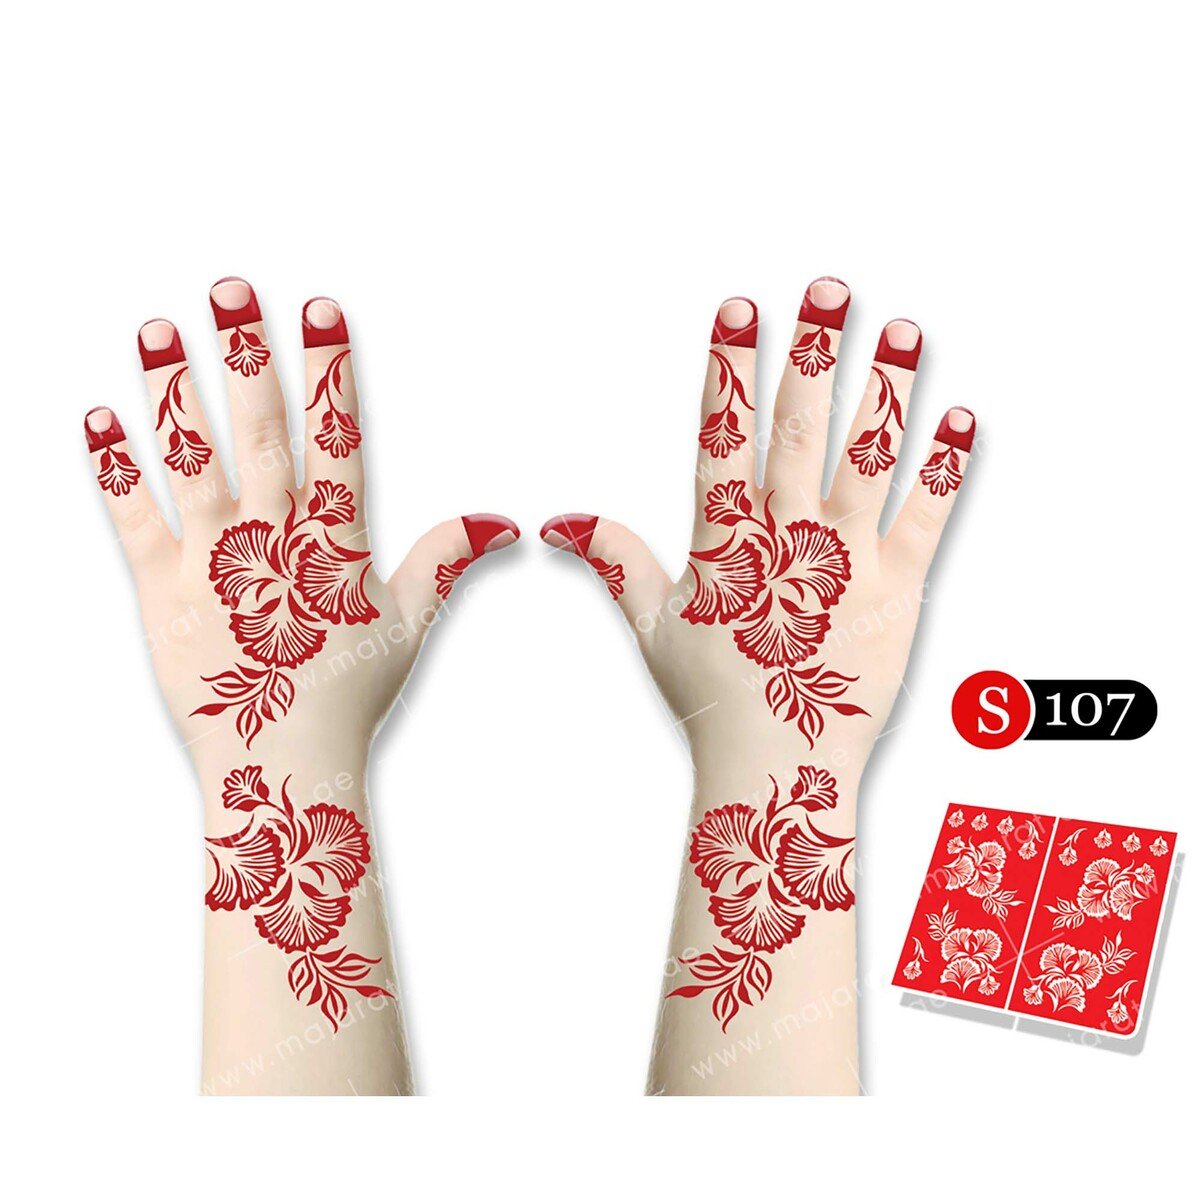 Majarat Henna Design Sticker Small S107 18x15cm